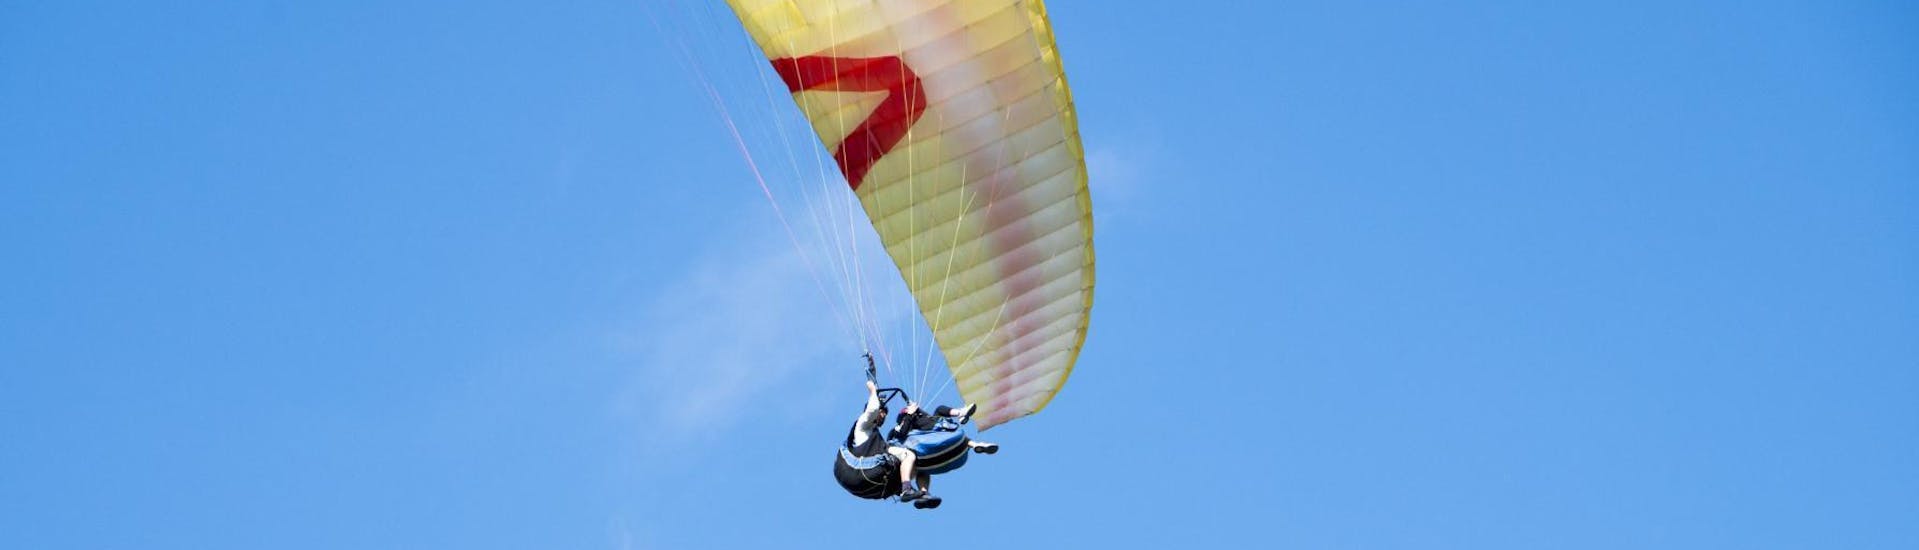 tandem-paragliding-at-lake-tribalj-sky-riders-paragliding-croatia-hero